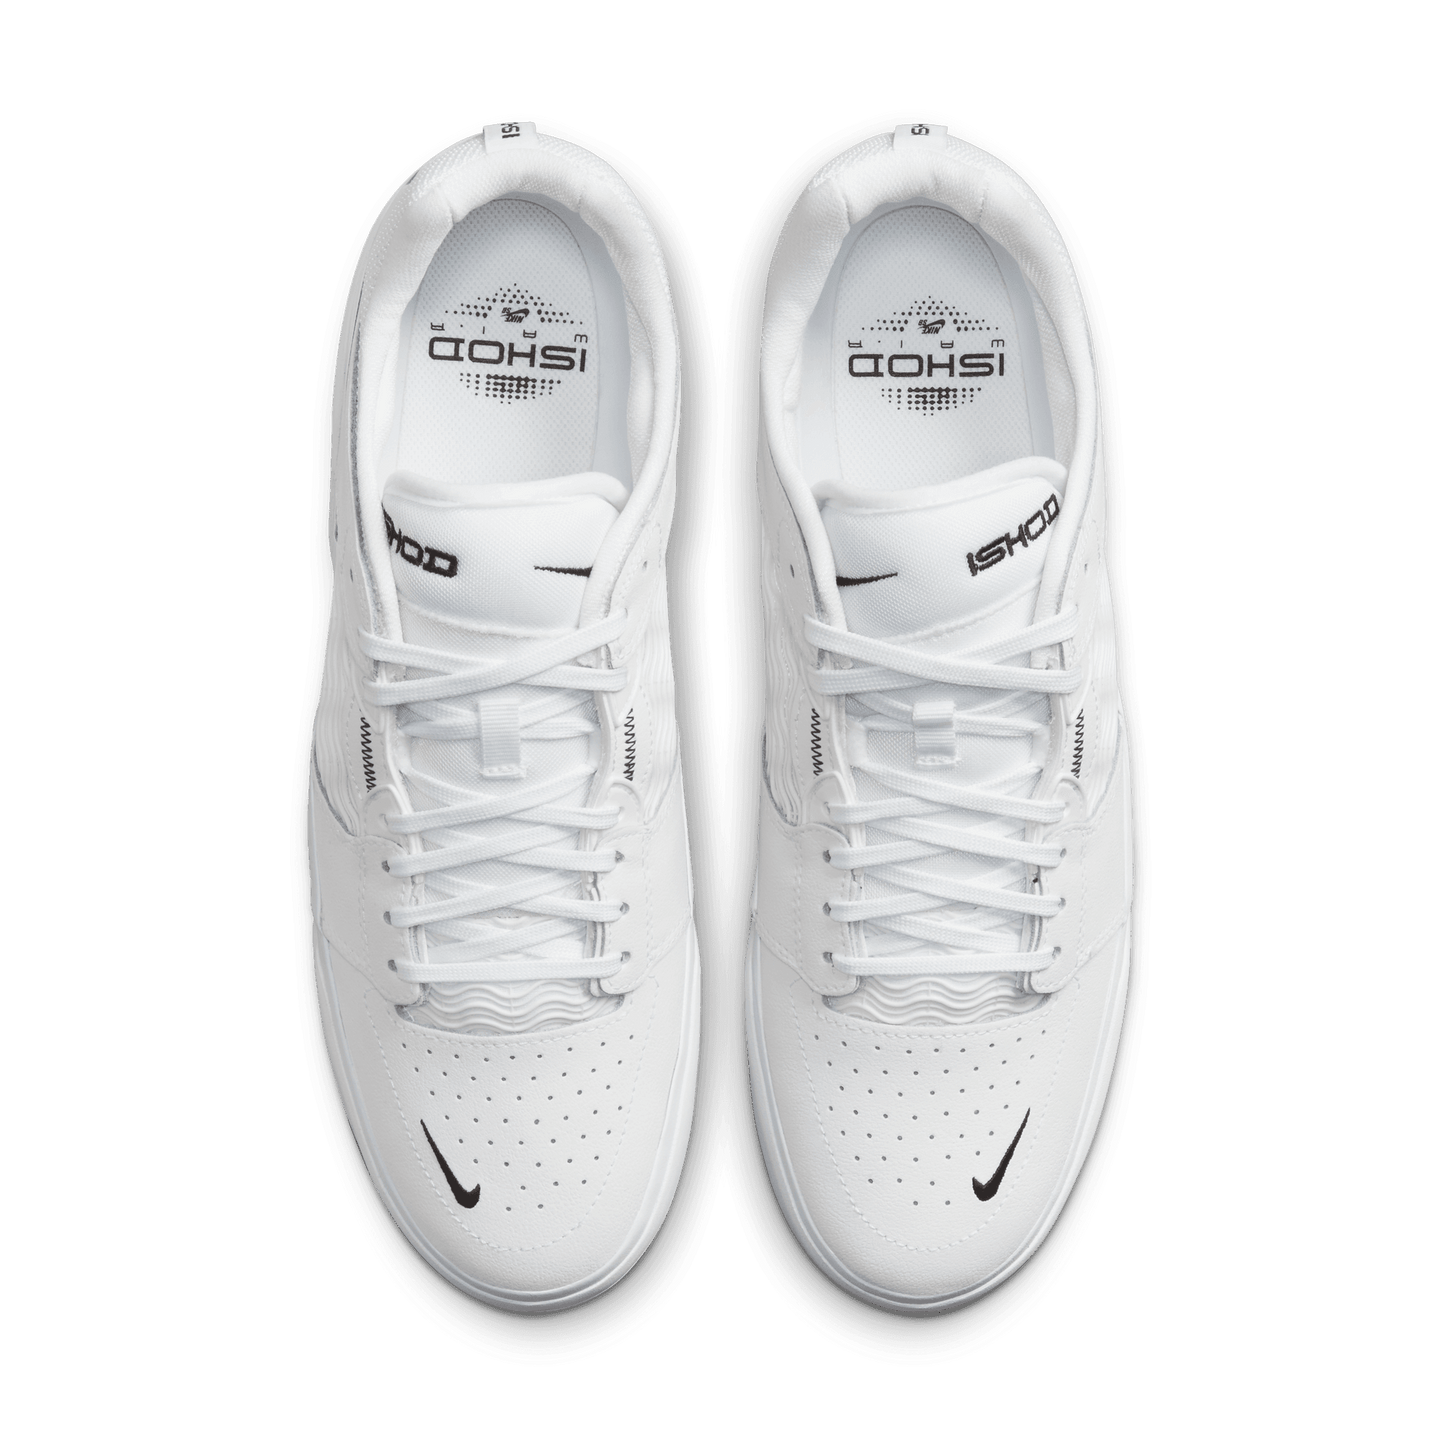 Nike SB Ishod Wair Premium white black white black